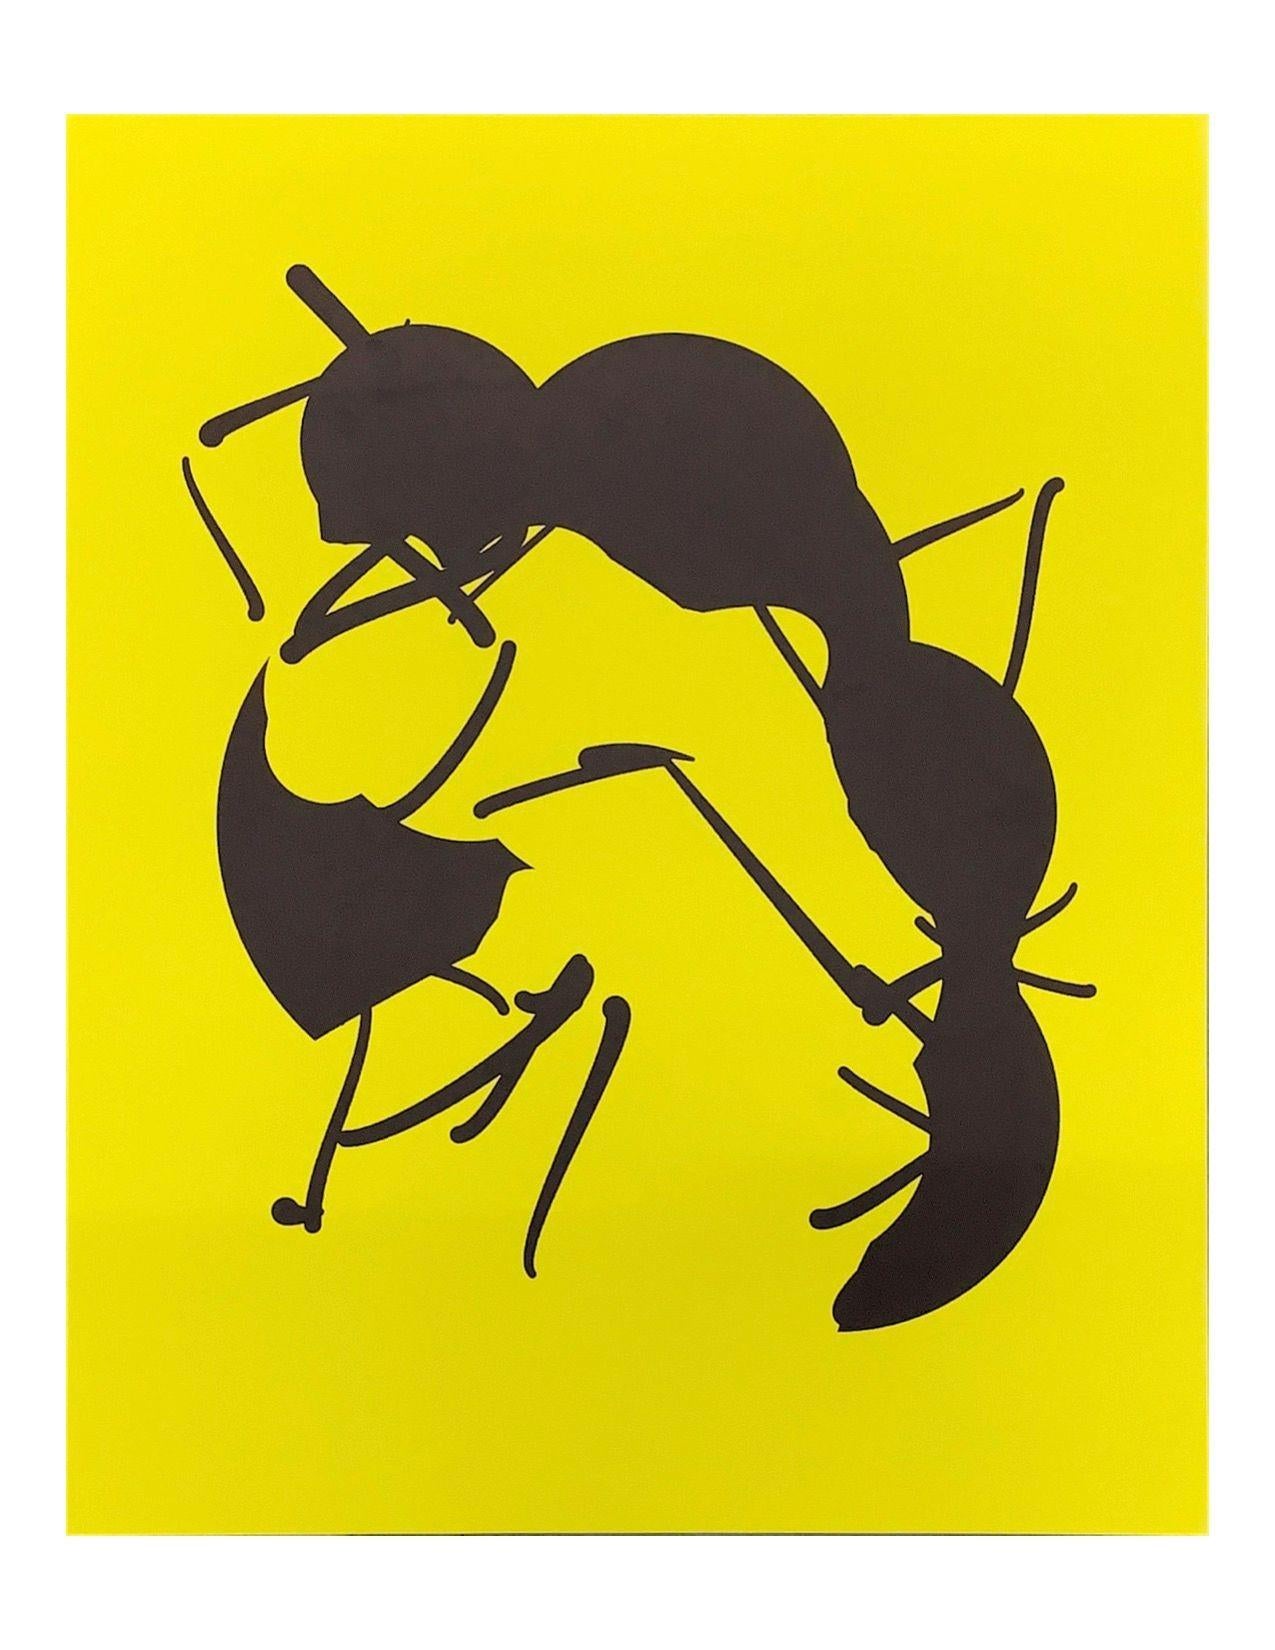 Ant 20 - Print by Tom White 